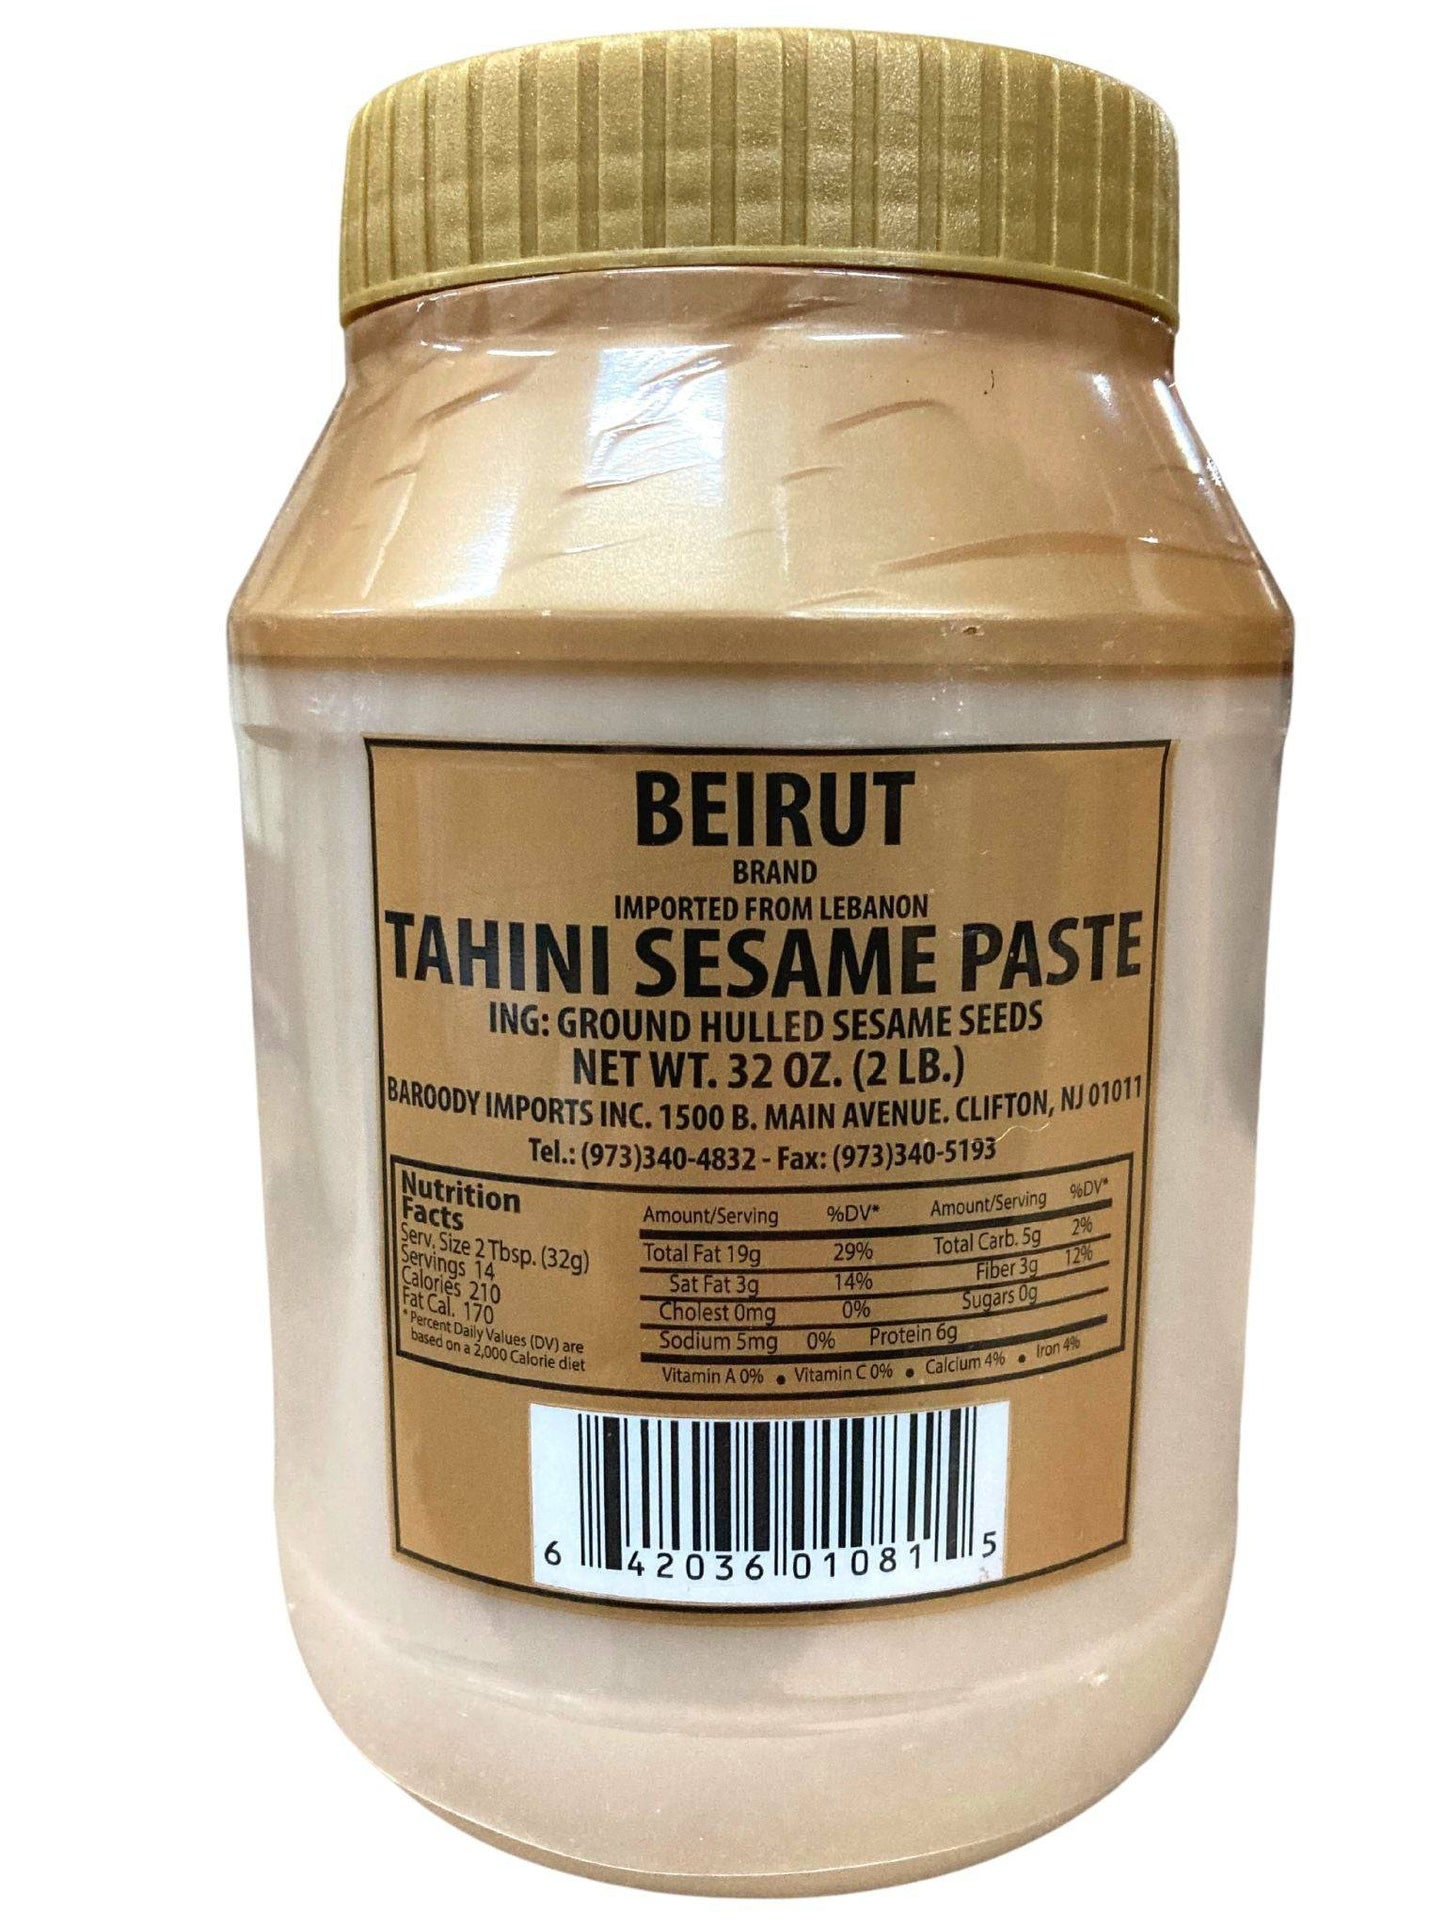 Beirut Tahini sesame paste